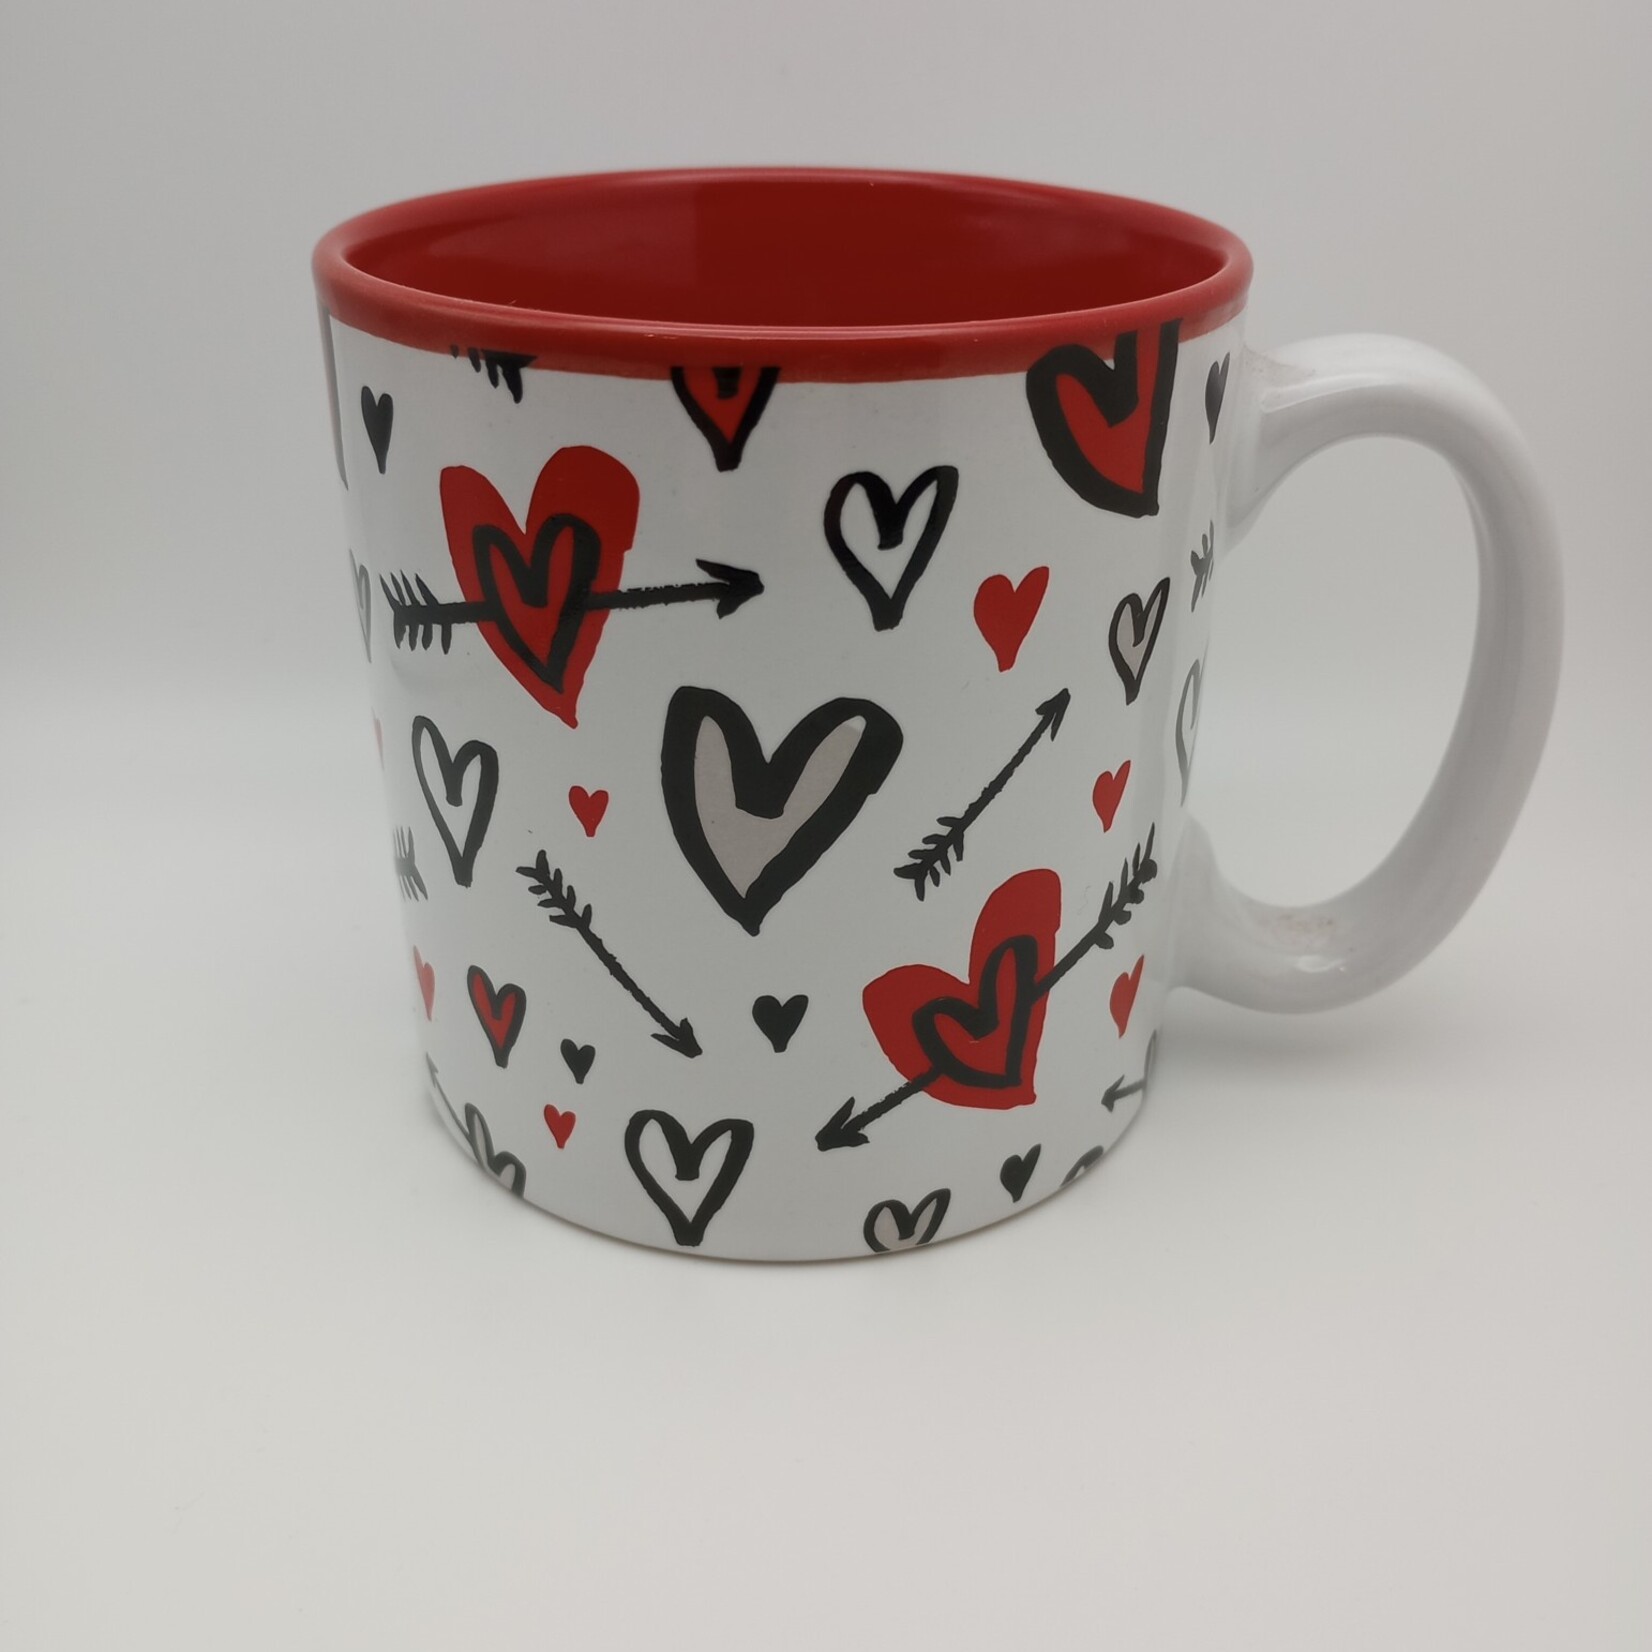 Heart Arrows Mug: